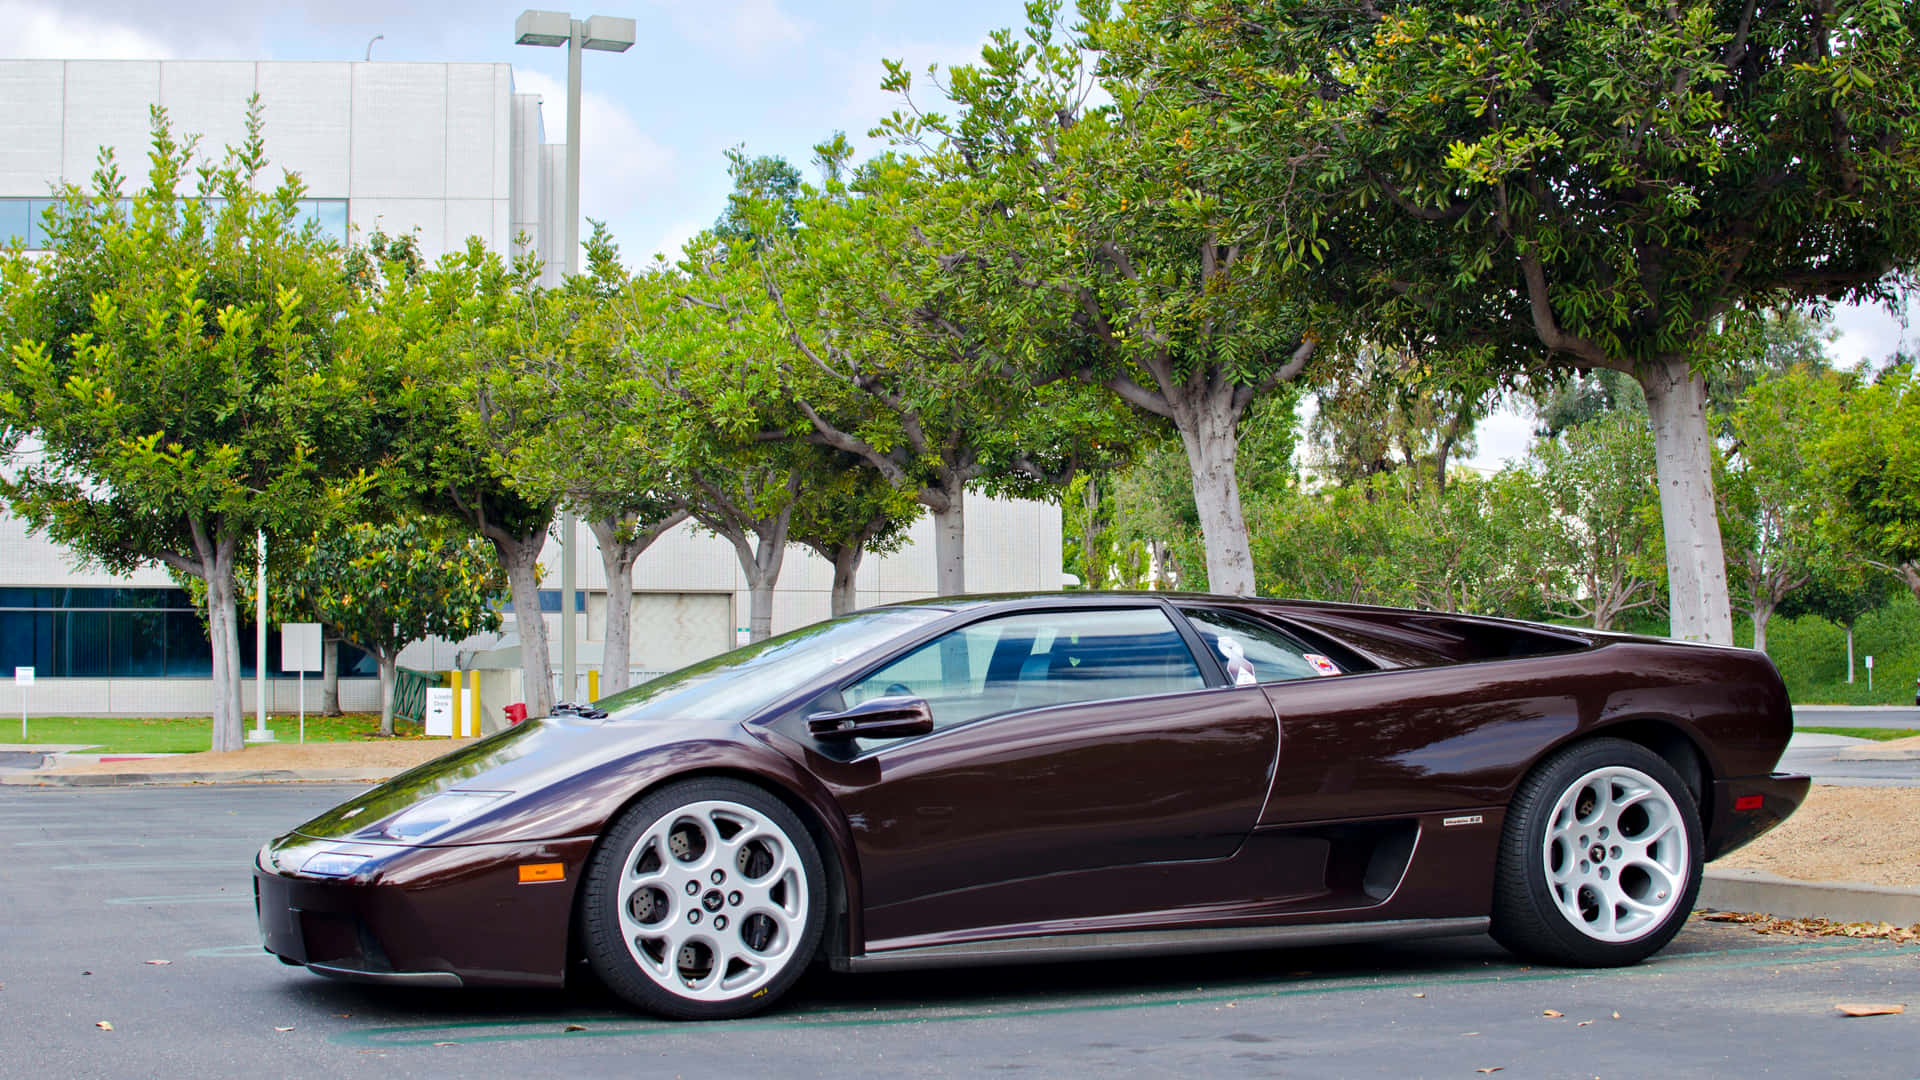 Stunning Lamborghini Diablo on the Road Wallpaper